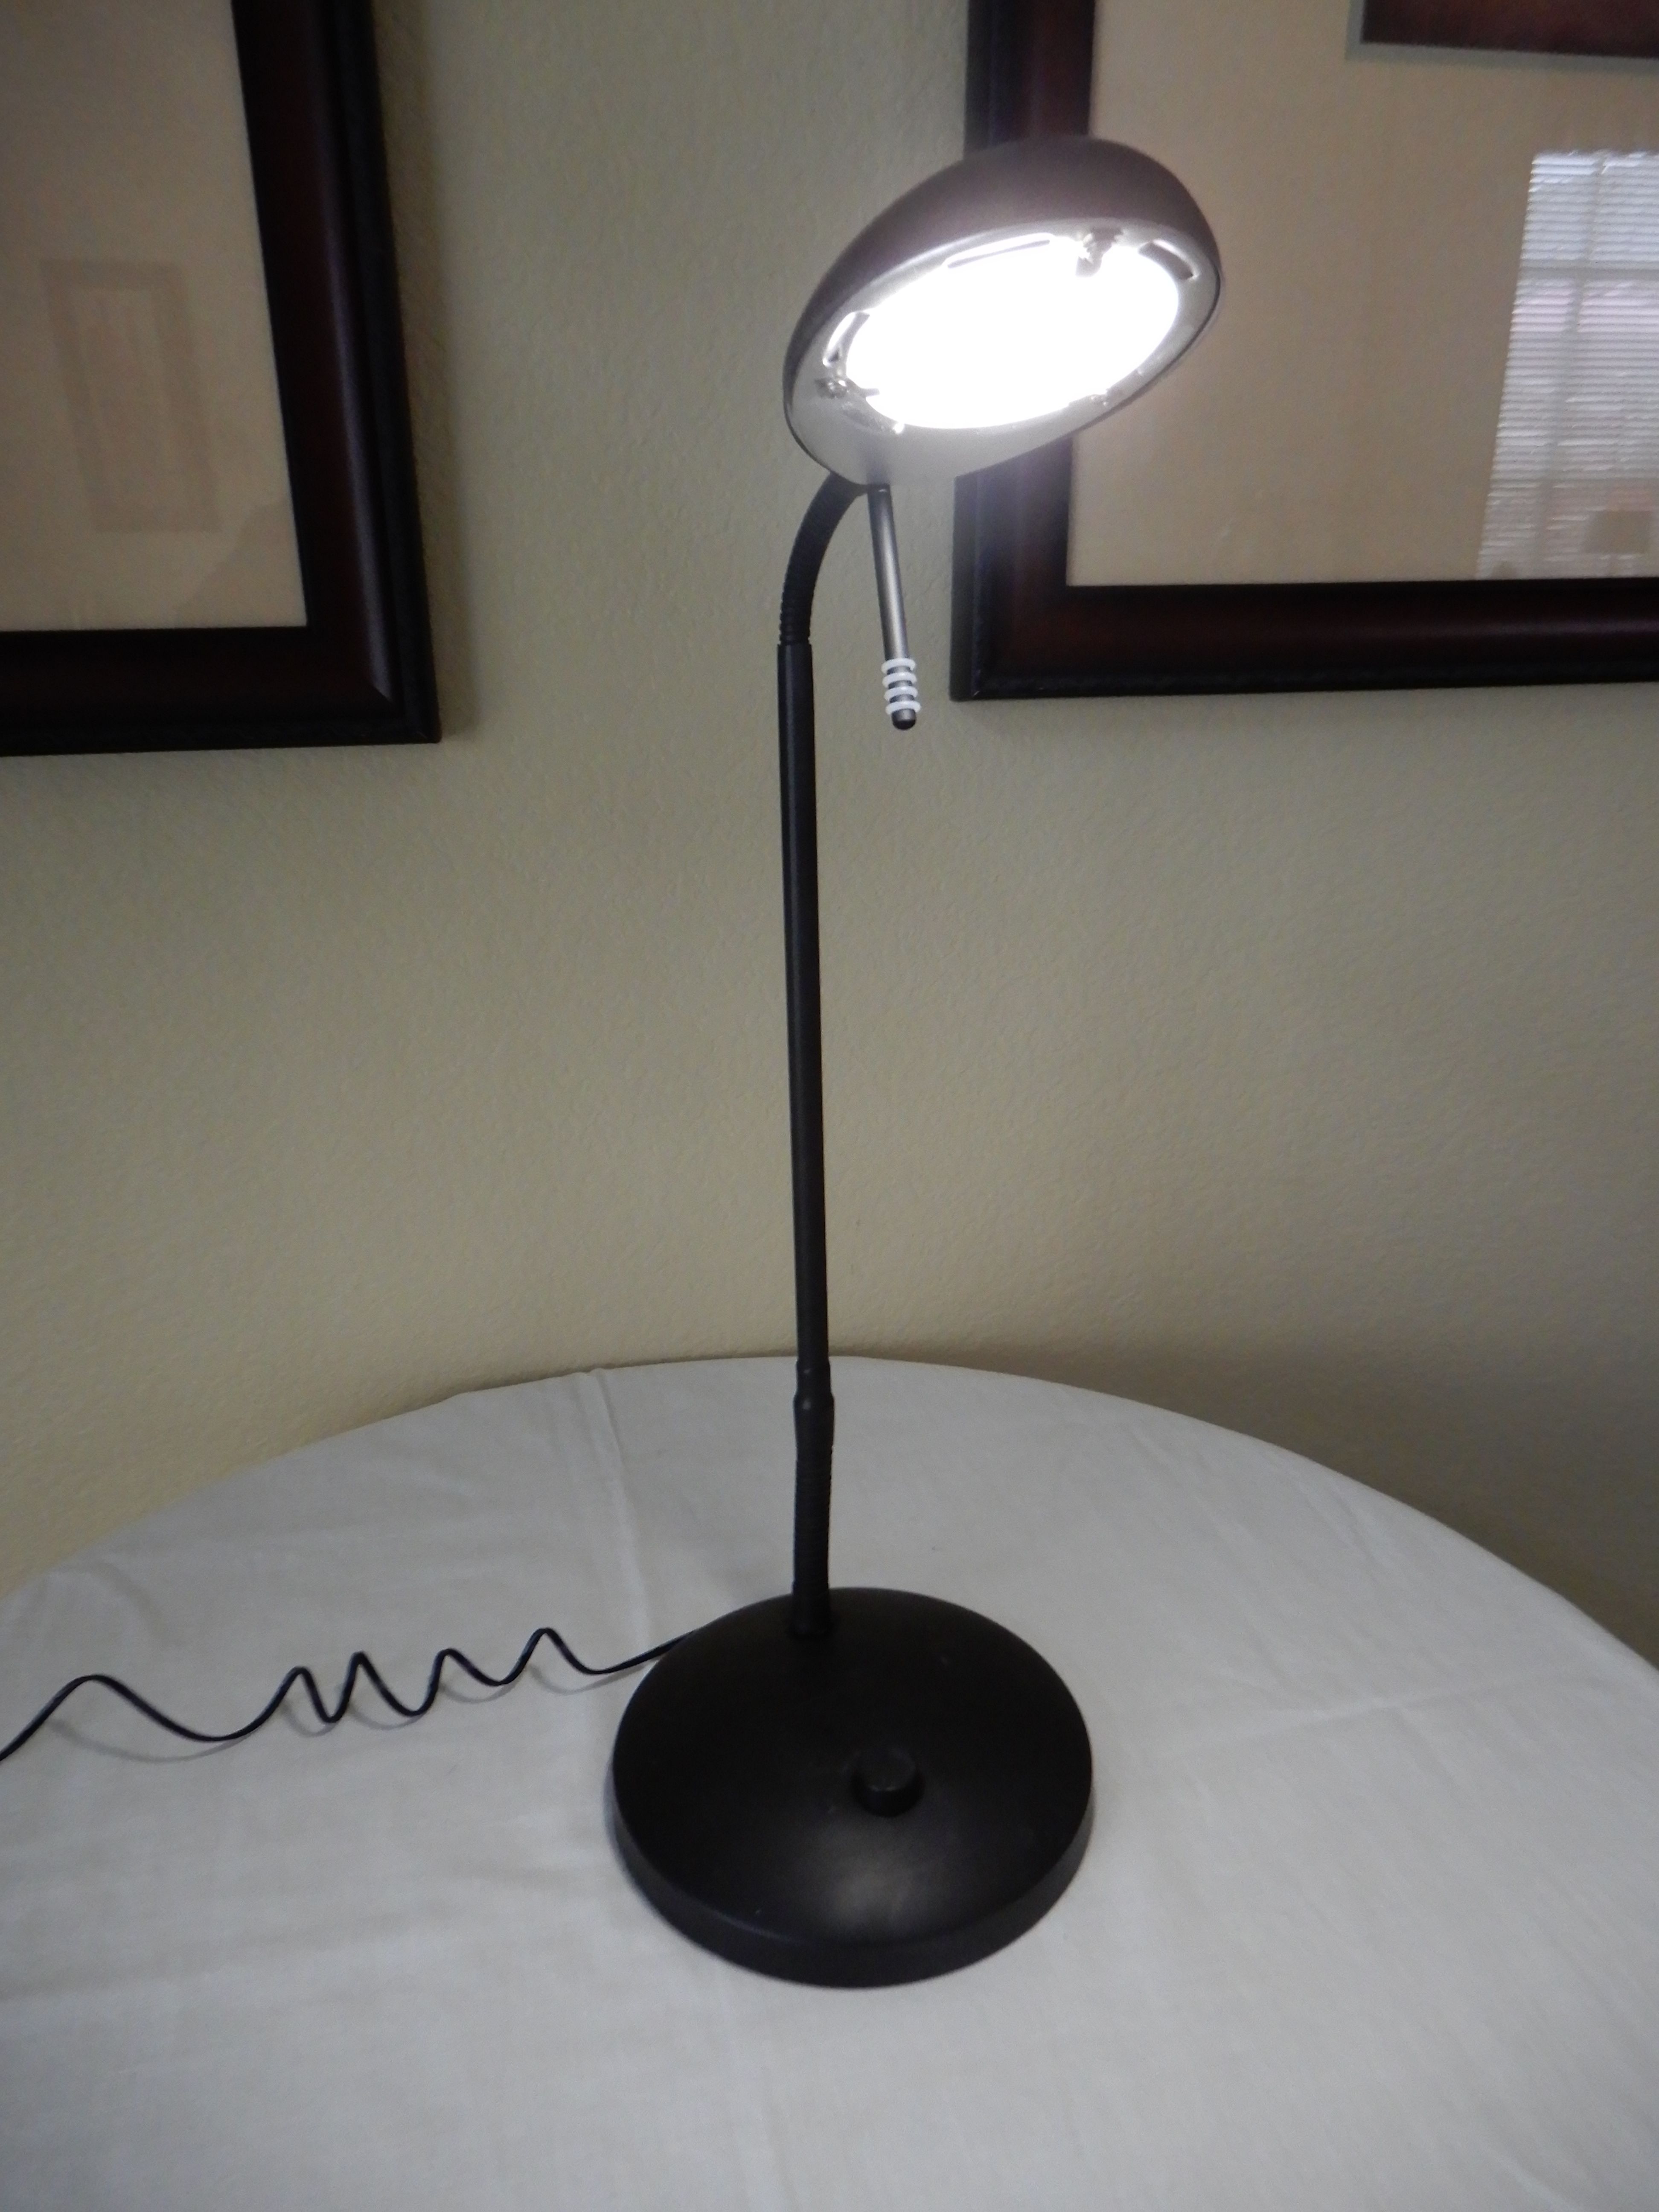 Portable Luminaire Task Light - Halogen Desk lamp - Black - Adjustable Arm